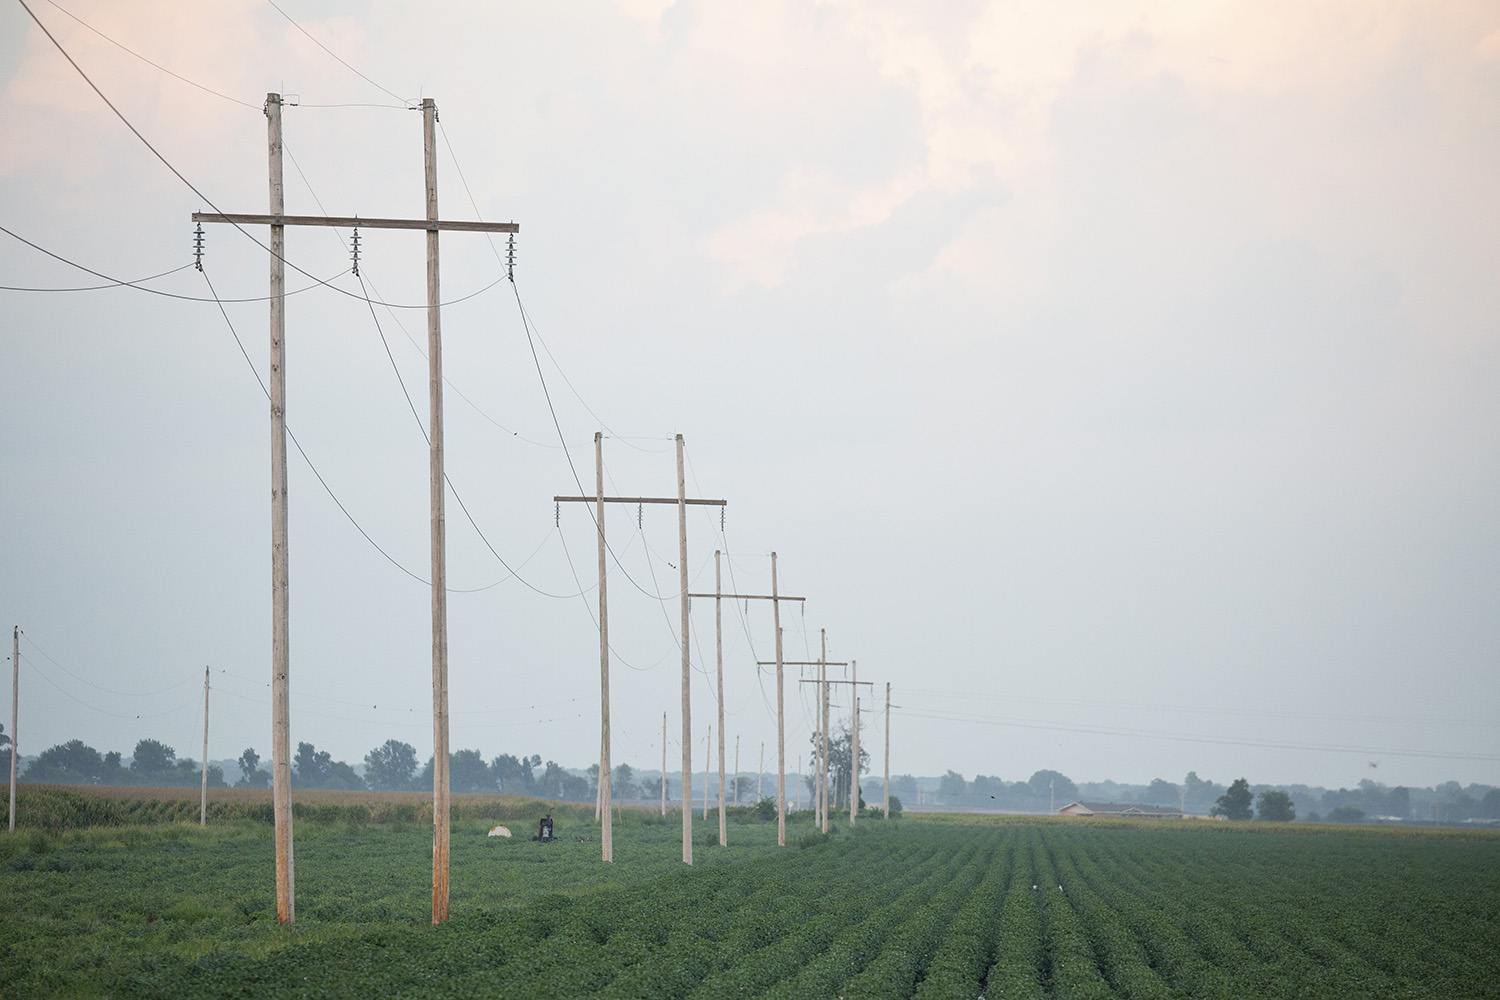 Georgia Co-op Pole Attachment Fee Lifts Rural Broadband Barrier